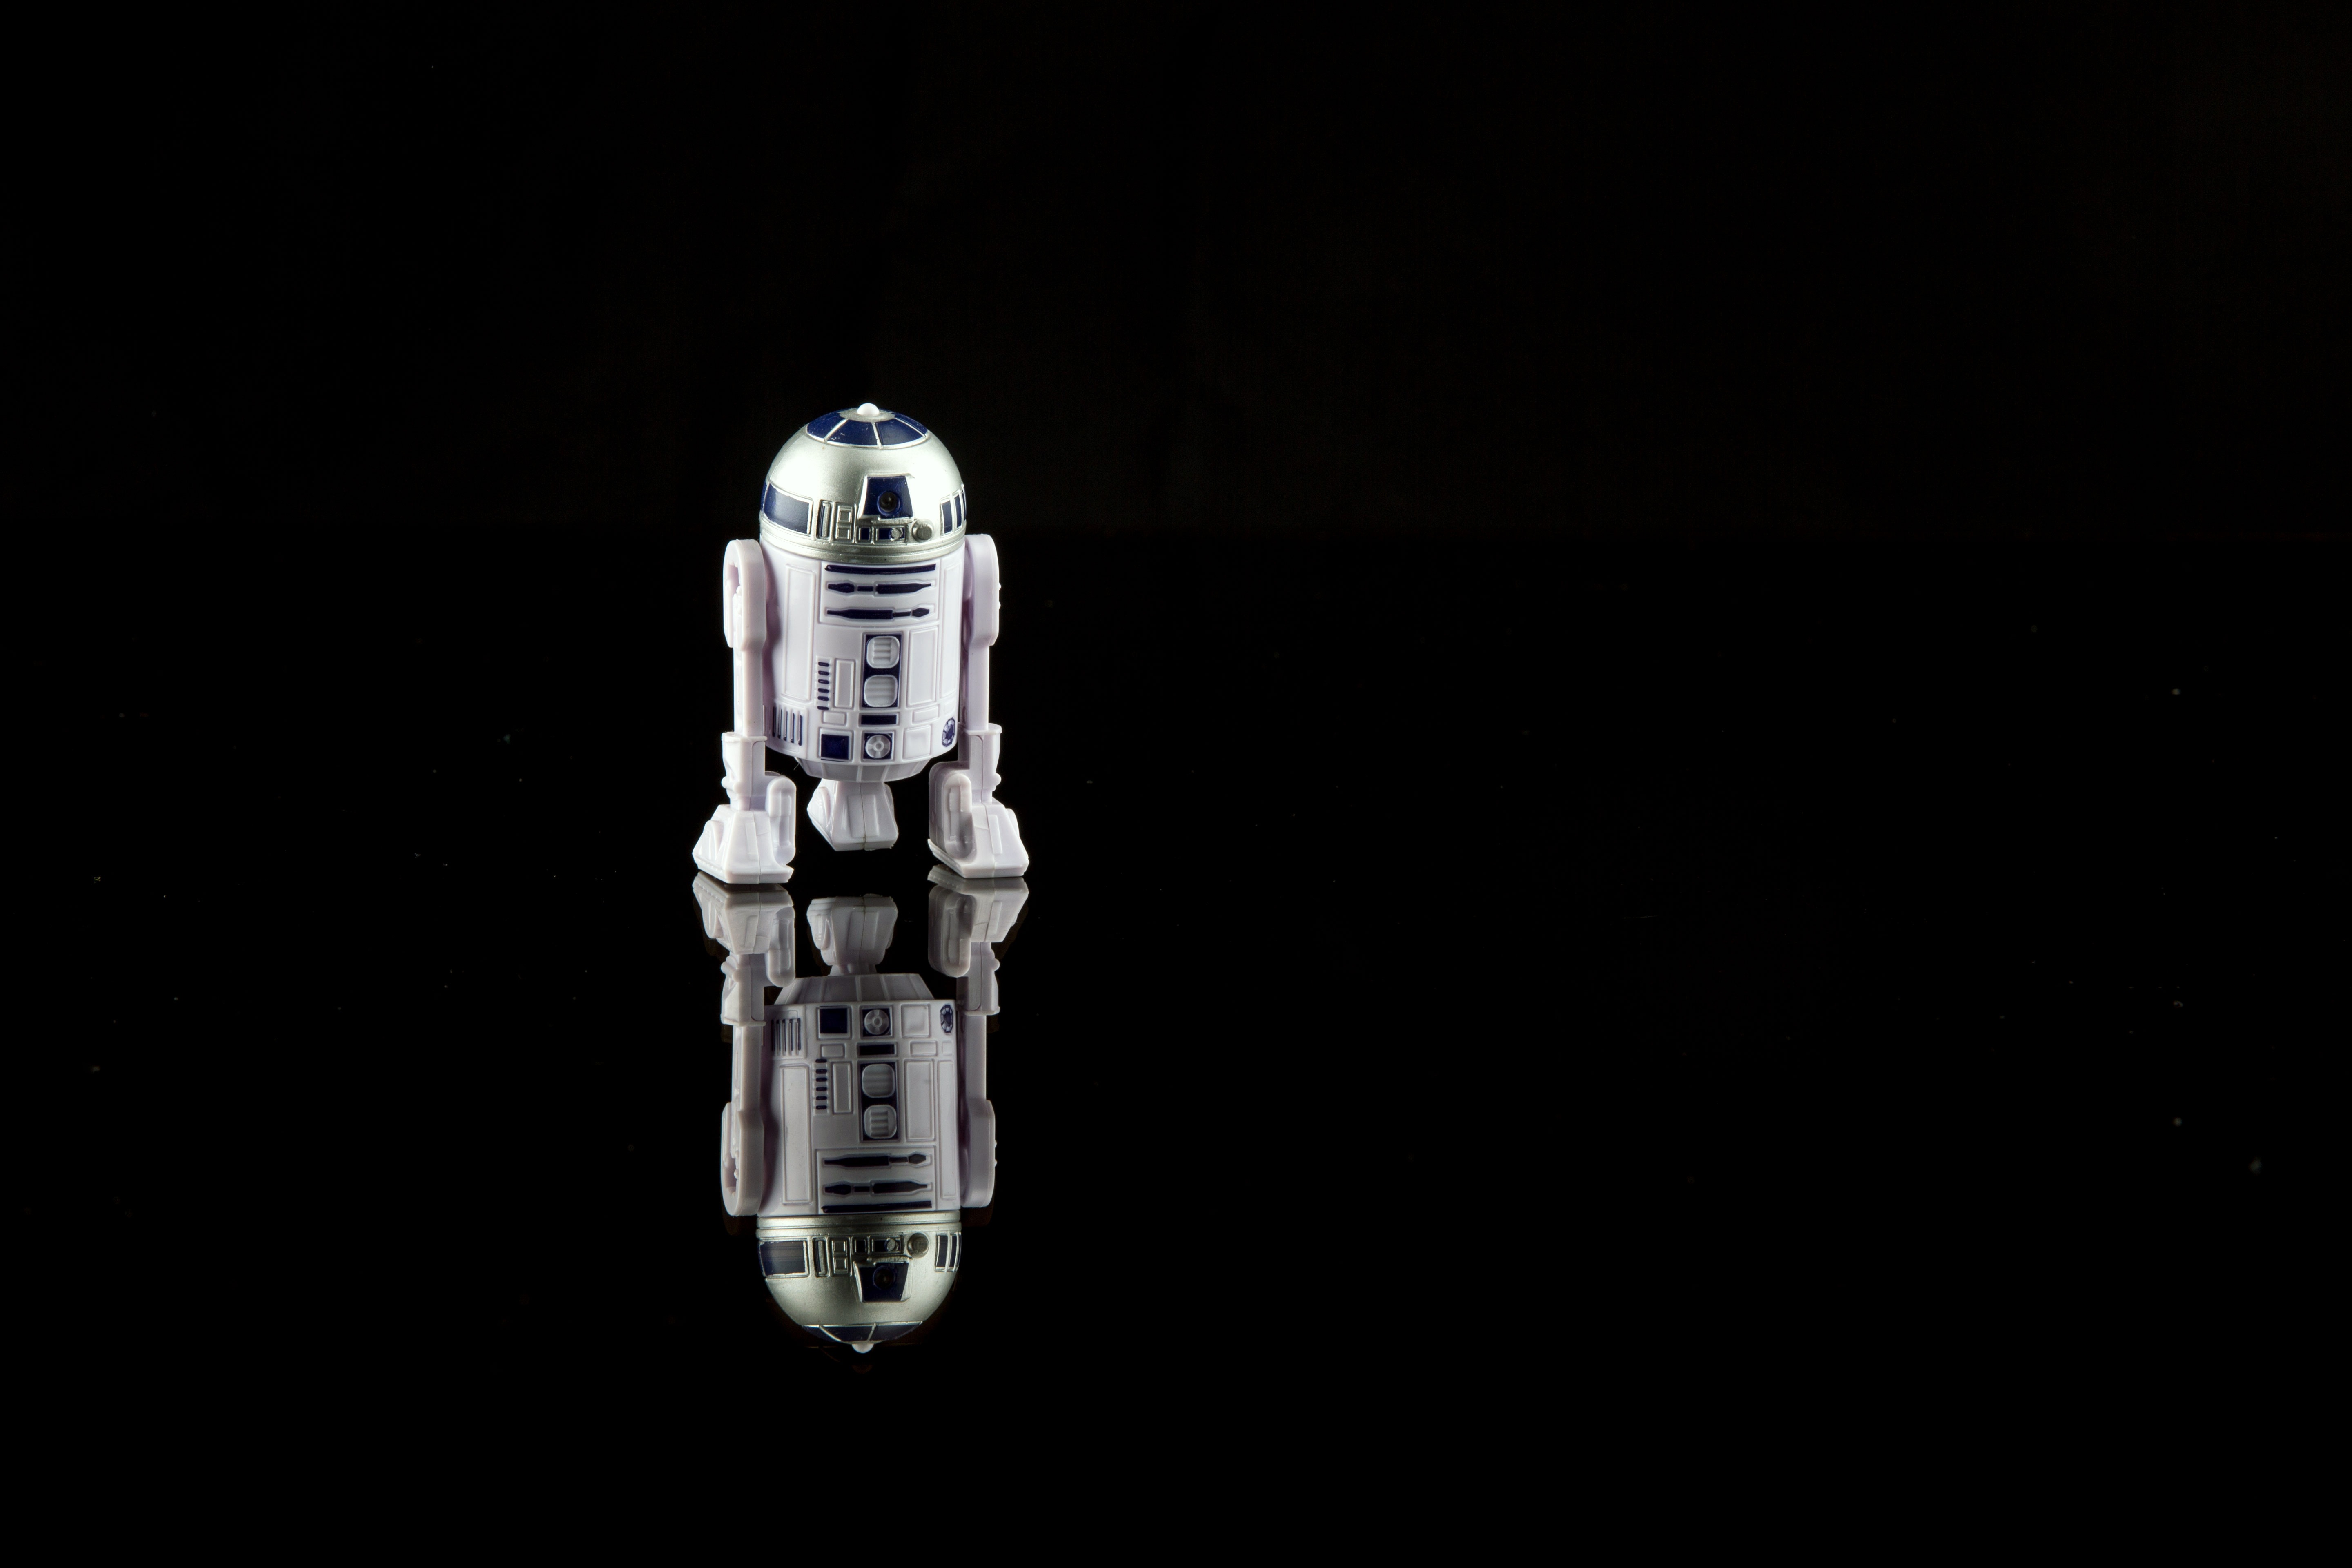 R2-D2 Toy Black background by Willmar Sandoval